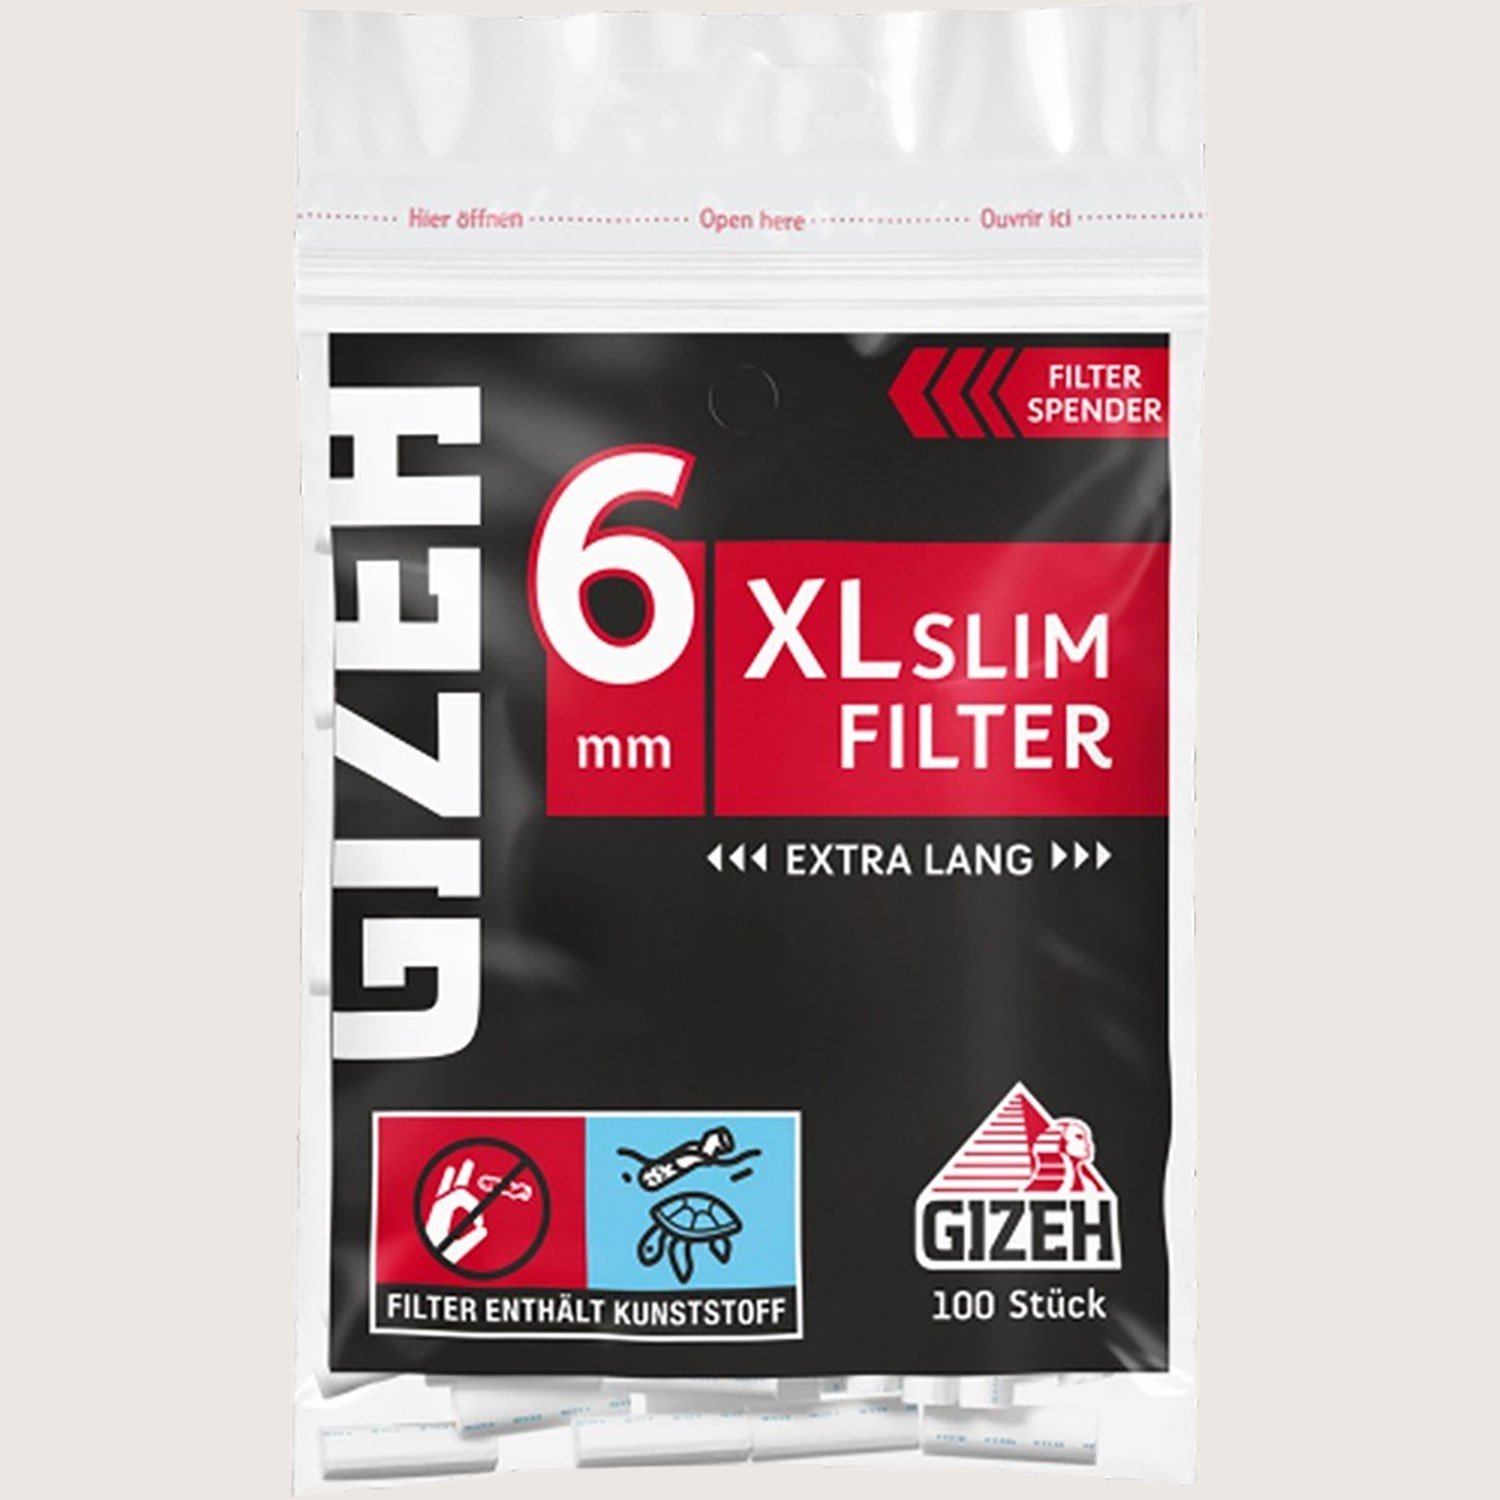 Gizeh Black XL Slim 100 Filter